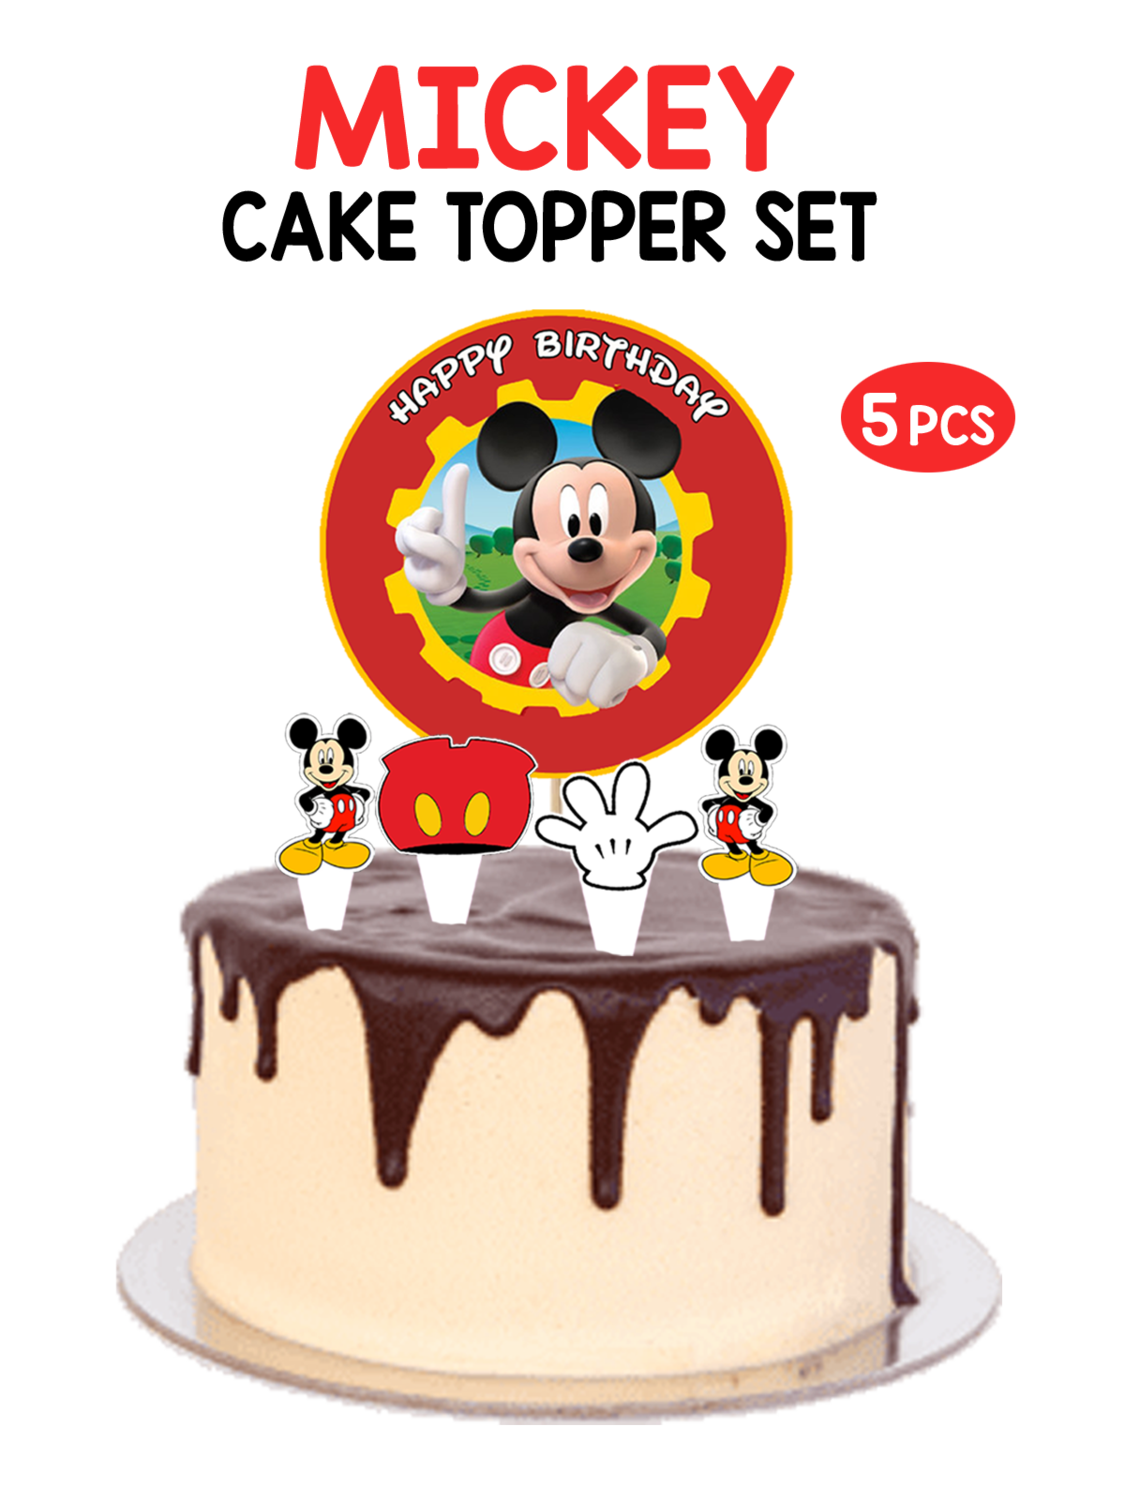 Mickey Mouse - Cake Topper 5pcs Set